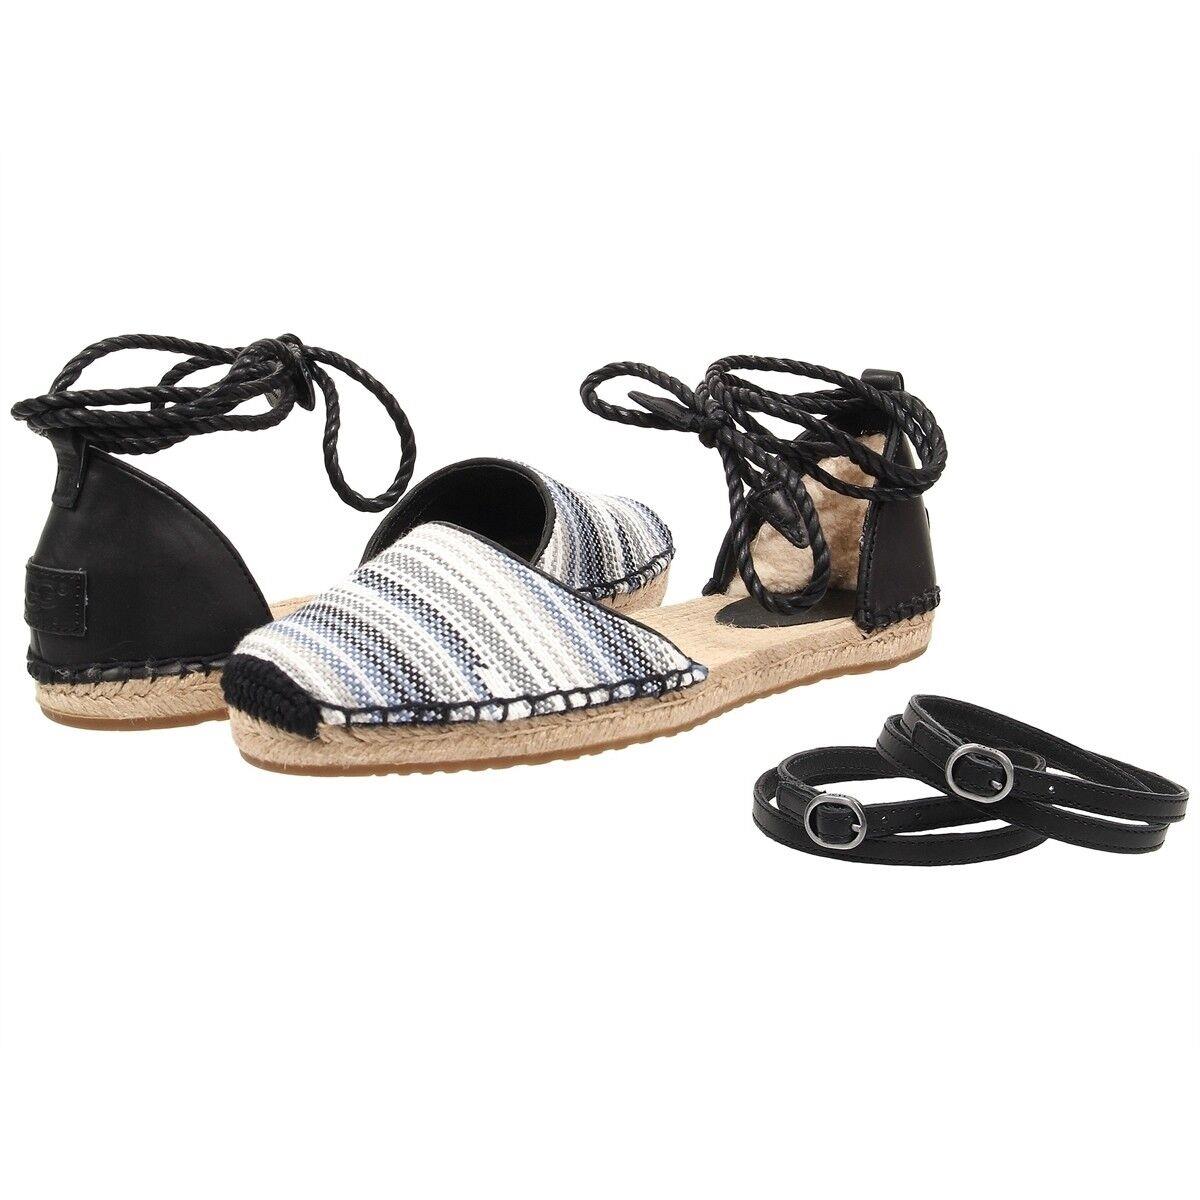 Ugg Australia Women`s Libbi Serape Espadrilles Ankle Strap Summer Sandals